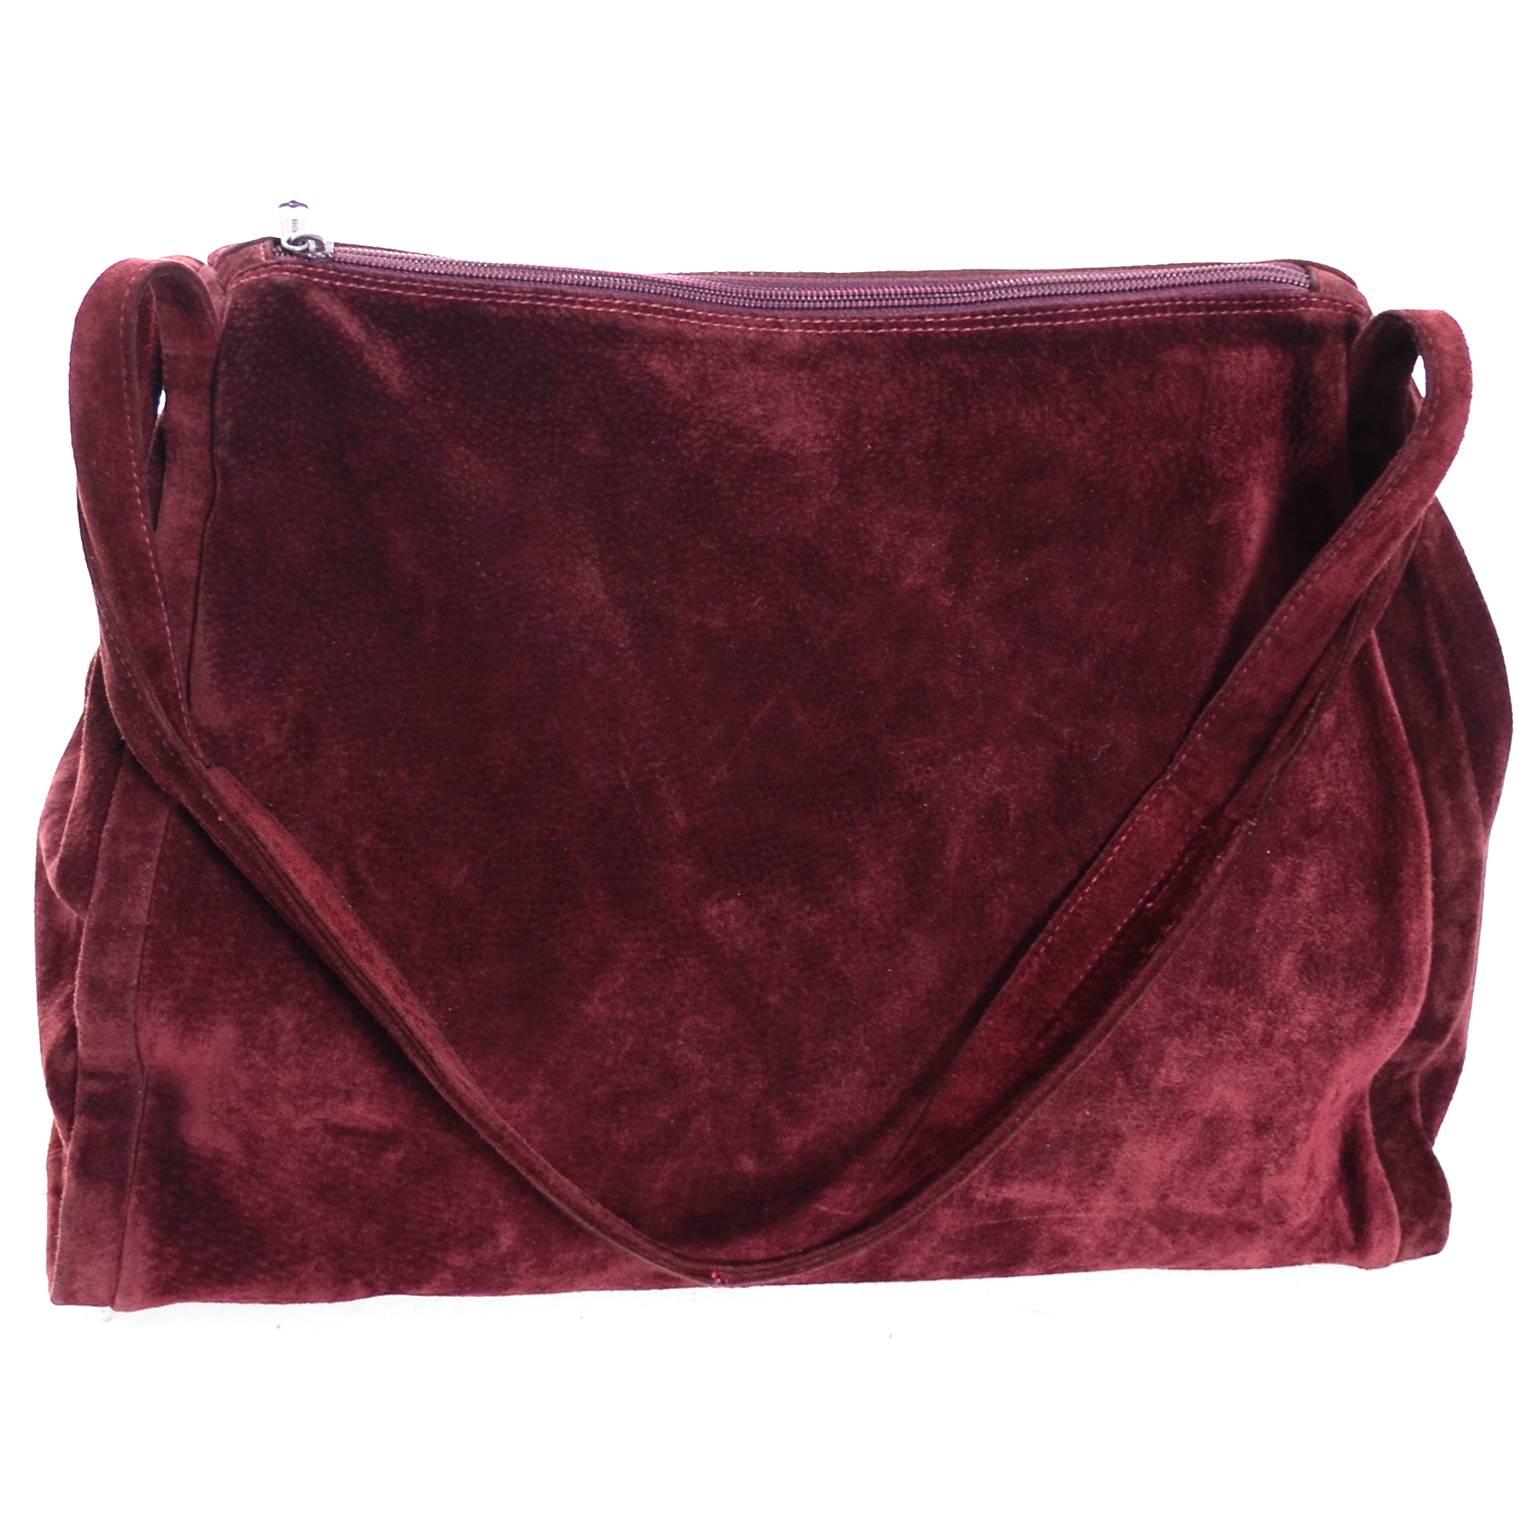 burgundy suede purse